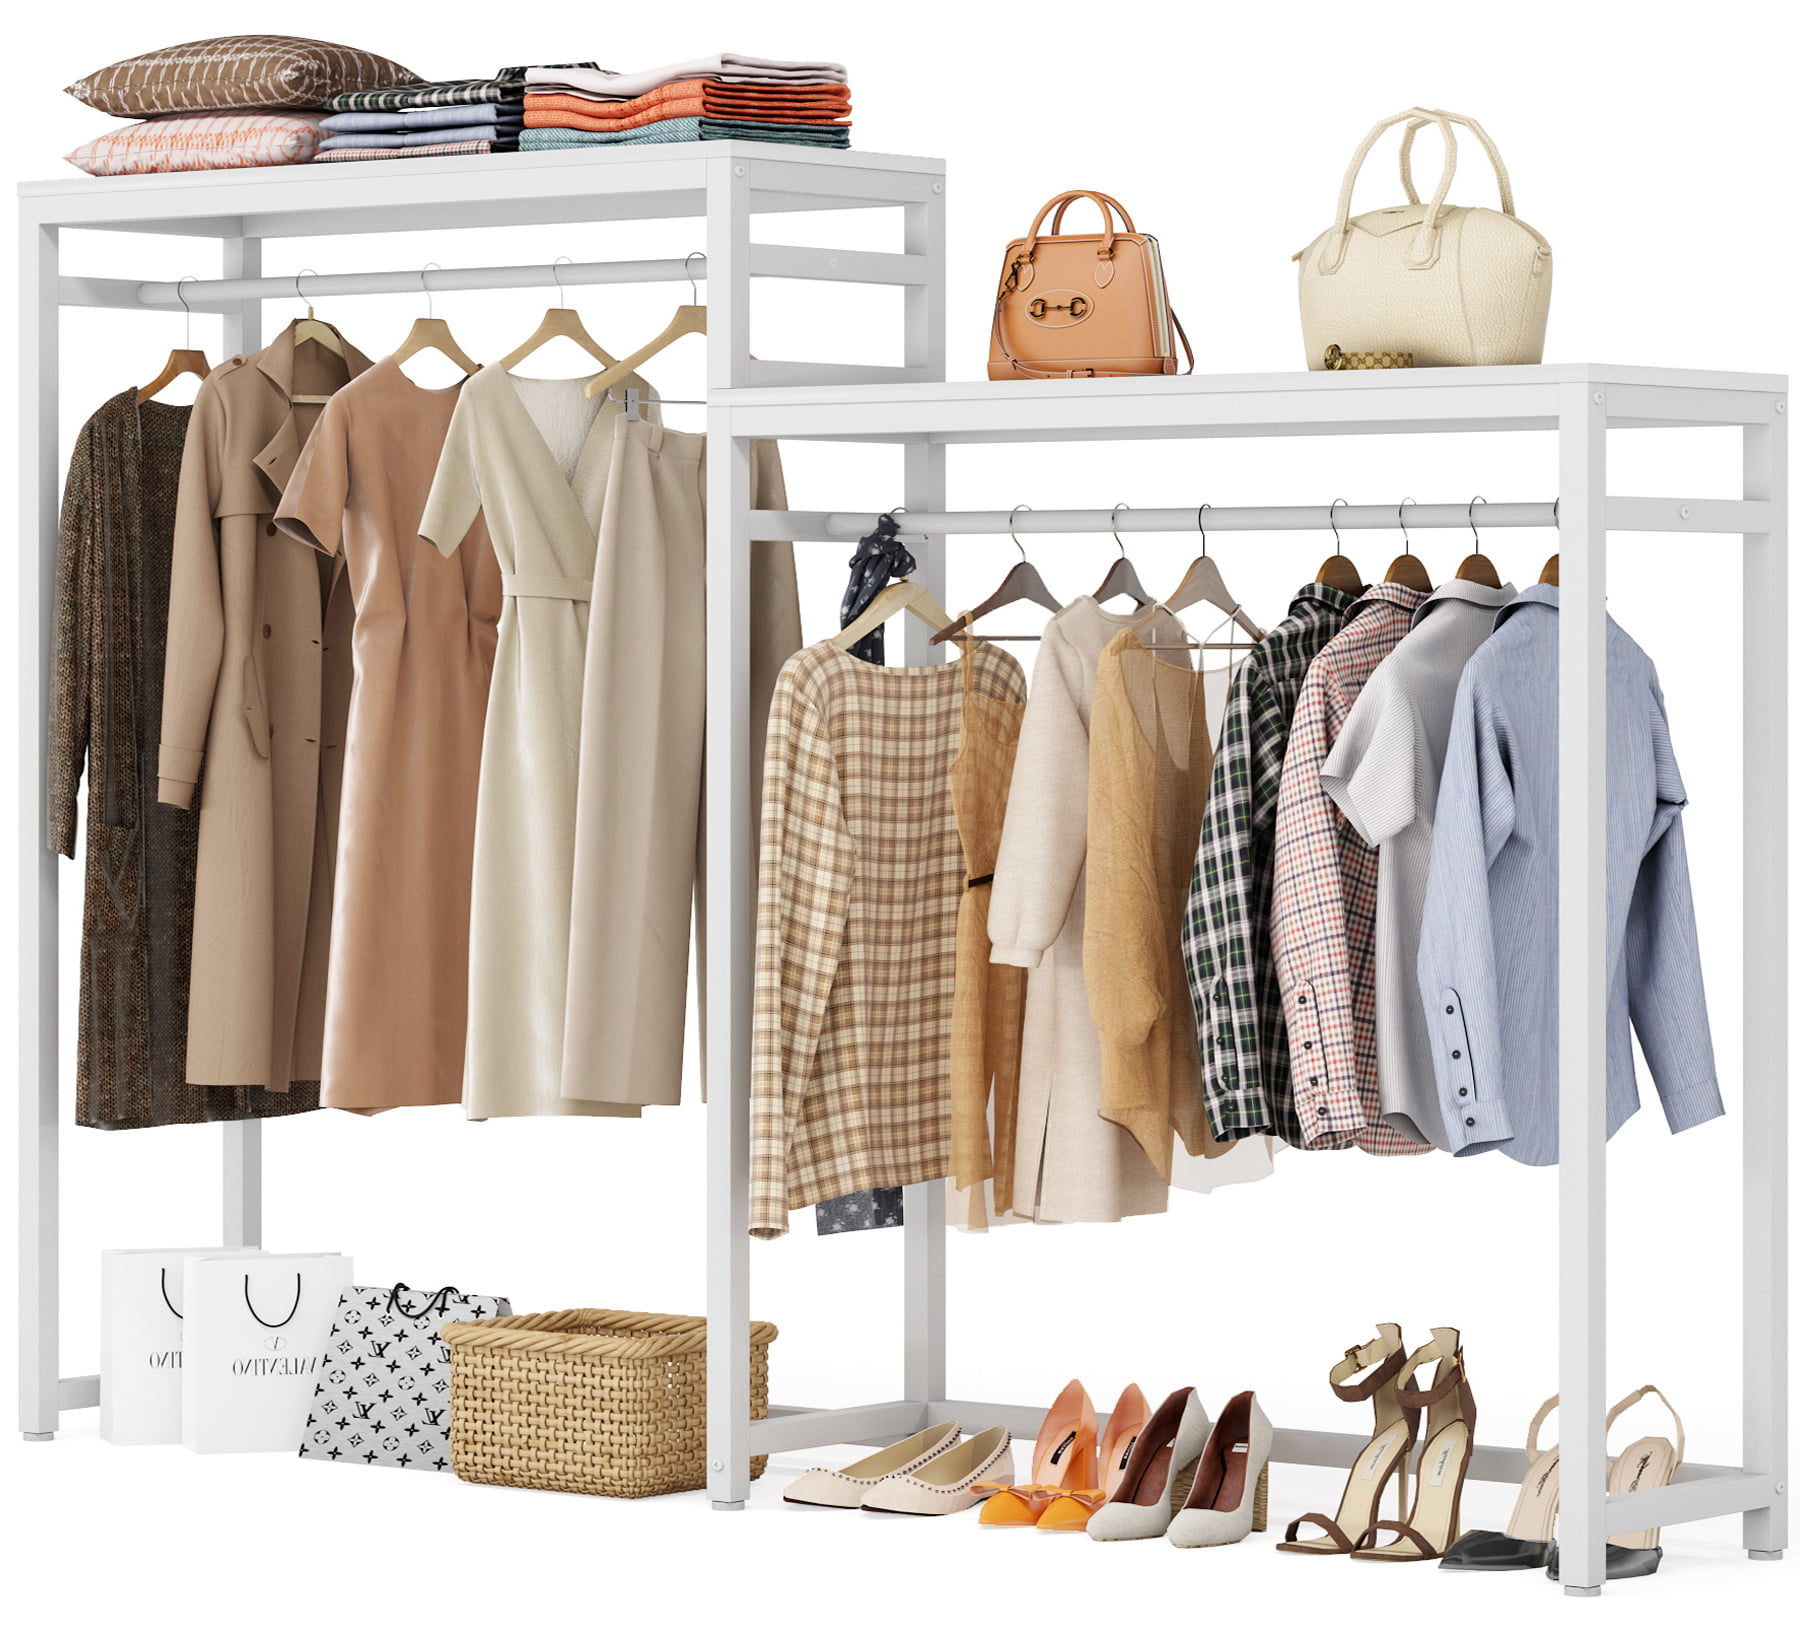 DlandHome Free-Standing Garment Clothing Racks, Home Metal Clothing Rack with 4-Tier Storage Shelves and Hanging Rod Closet Storage Organizer